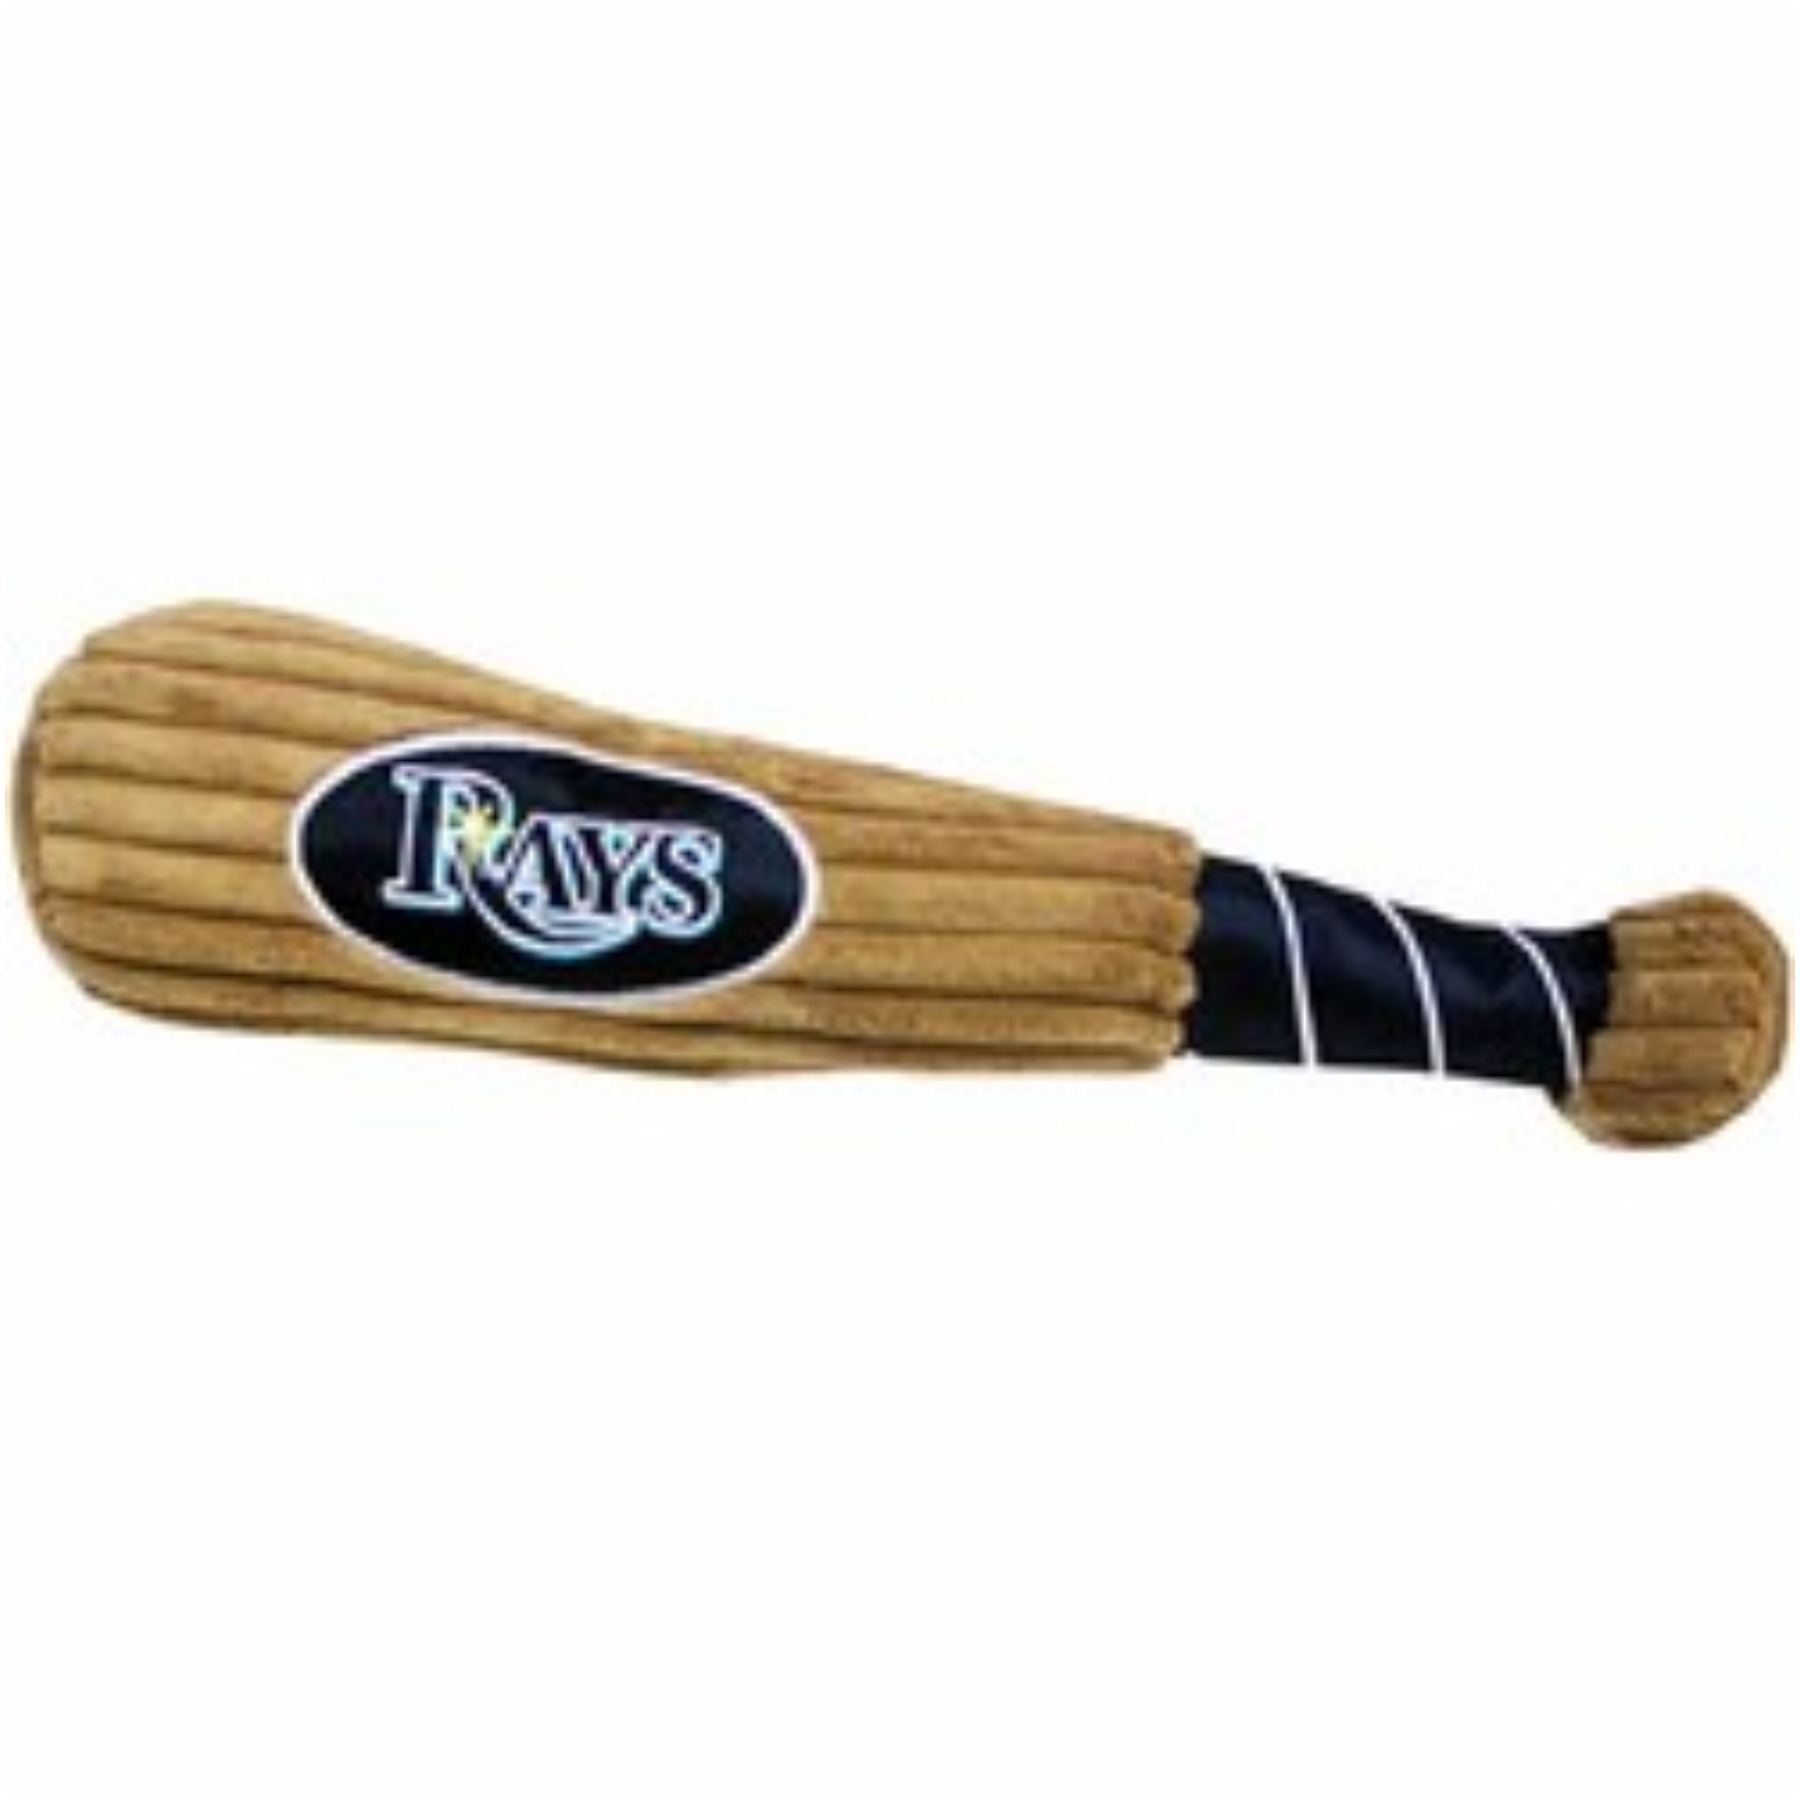 Tampa Bay Rays Bat Toy